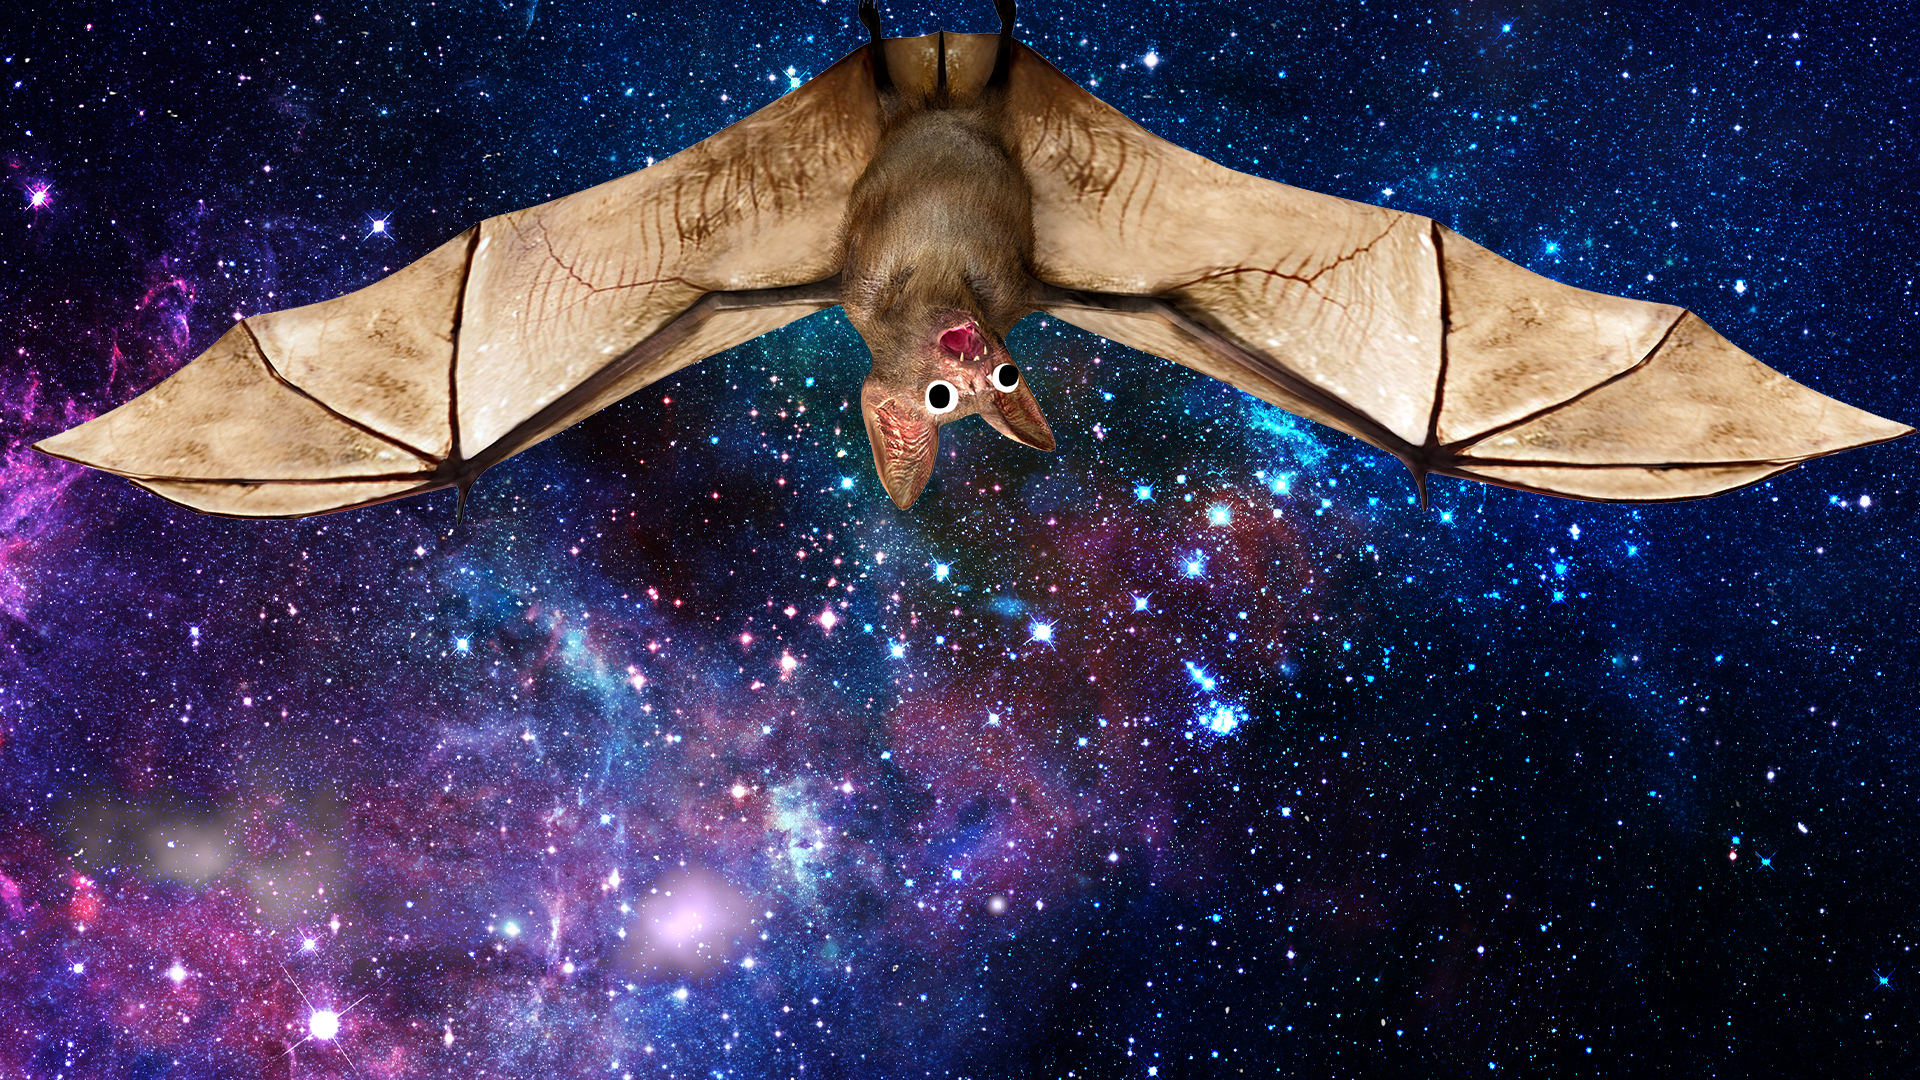 Bat on starry background